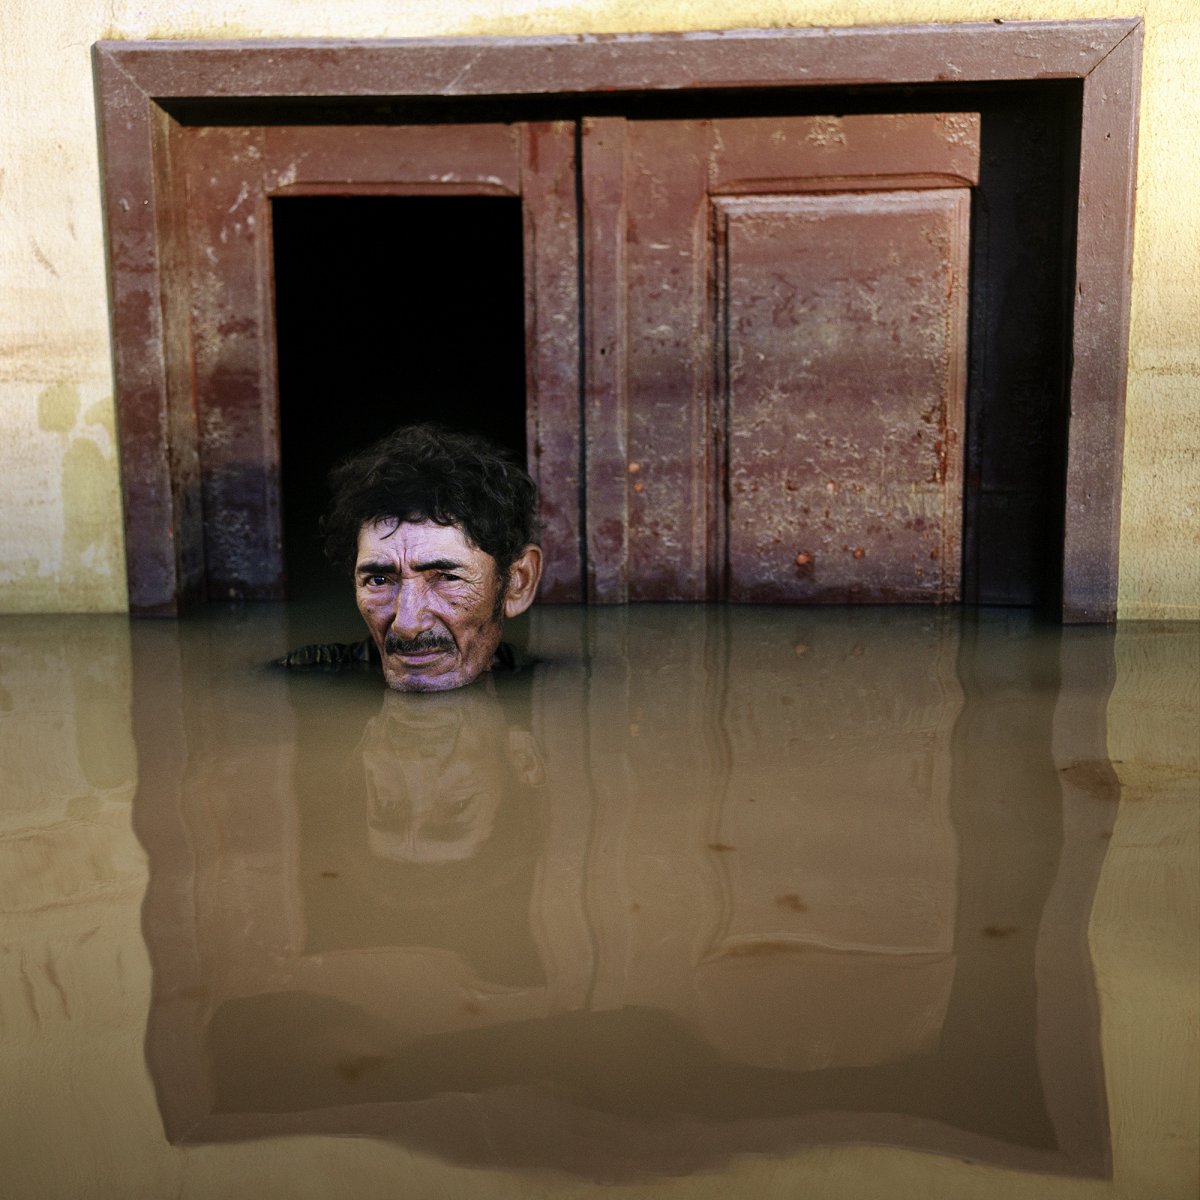 João Pereira de Araújo, Taquari District, Rio Branco, Brazil, March 2015. From the series Drowning World